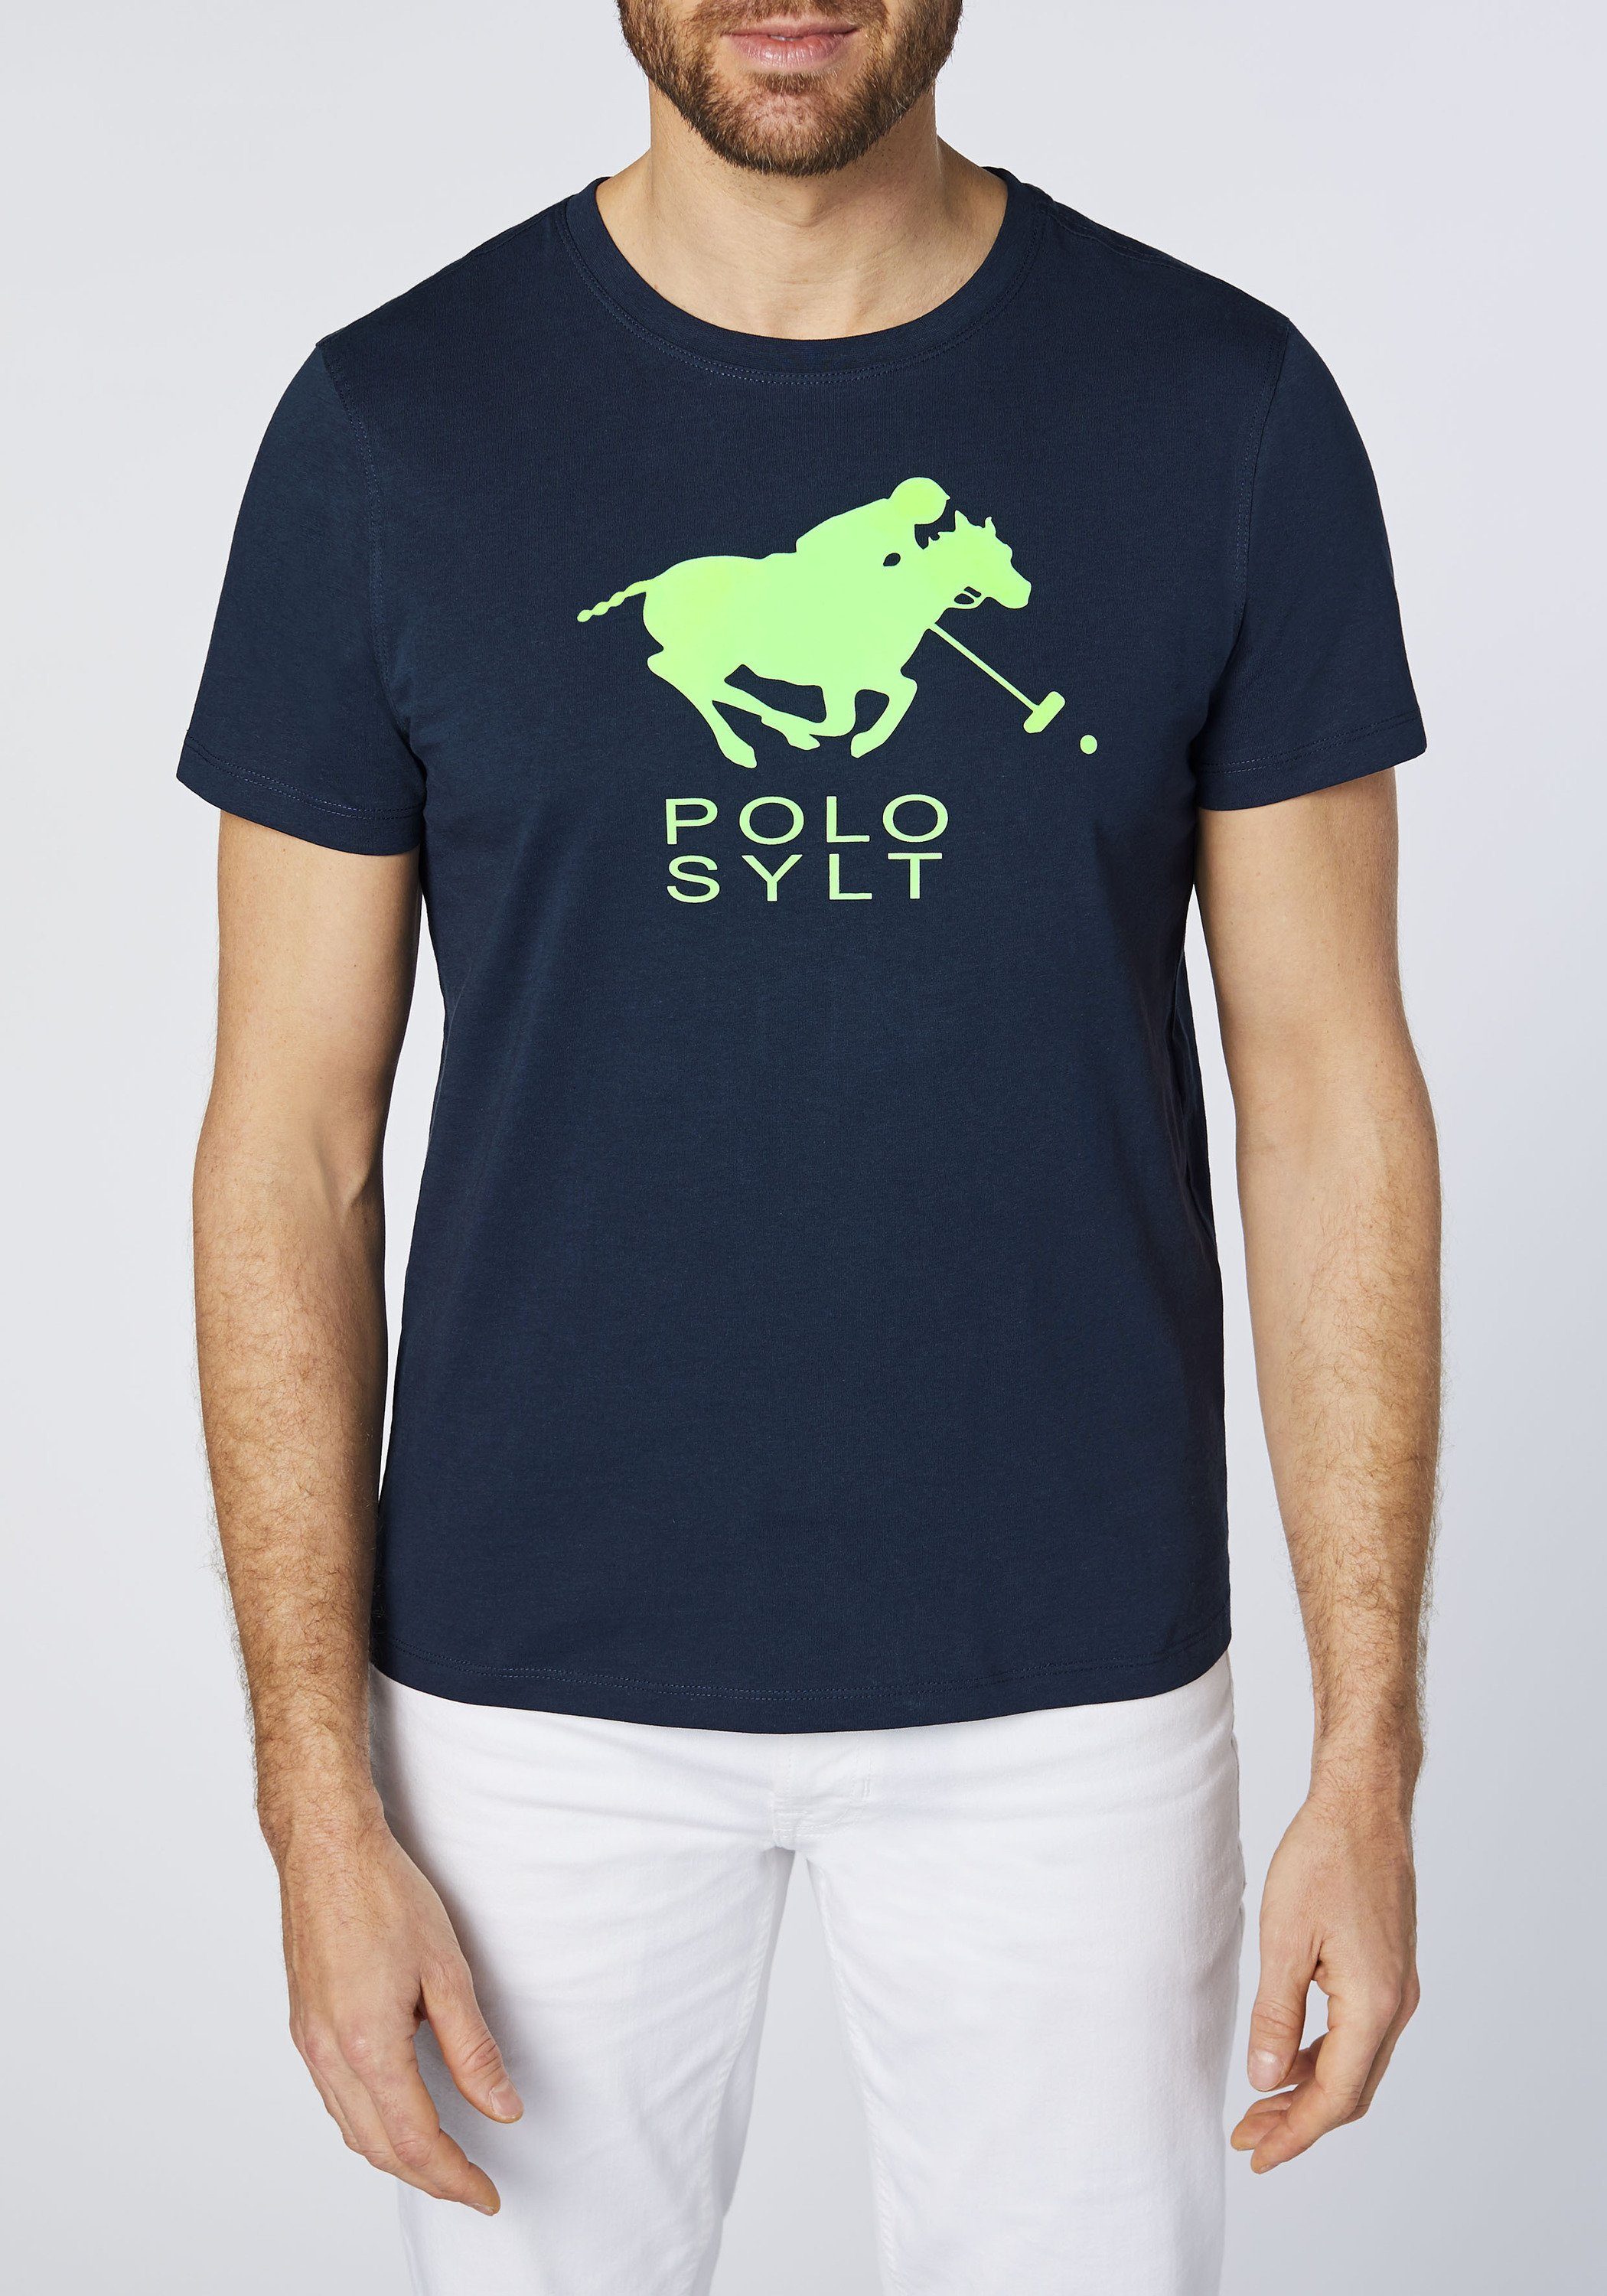 Print-Shirt Polo Total Sylt Frontprint Logo Neon Eclipse mit